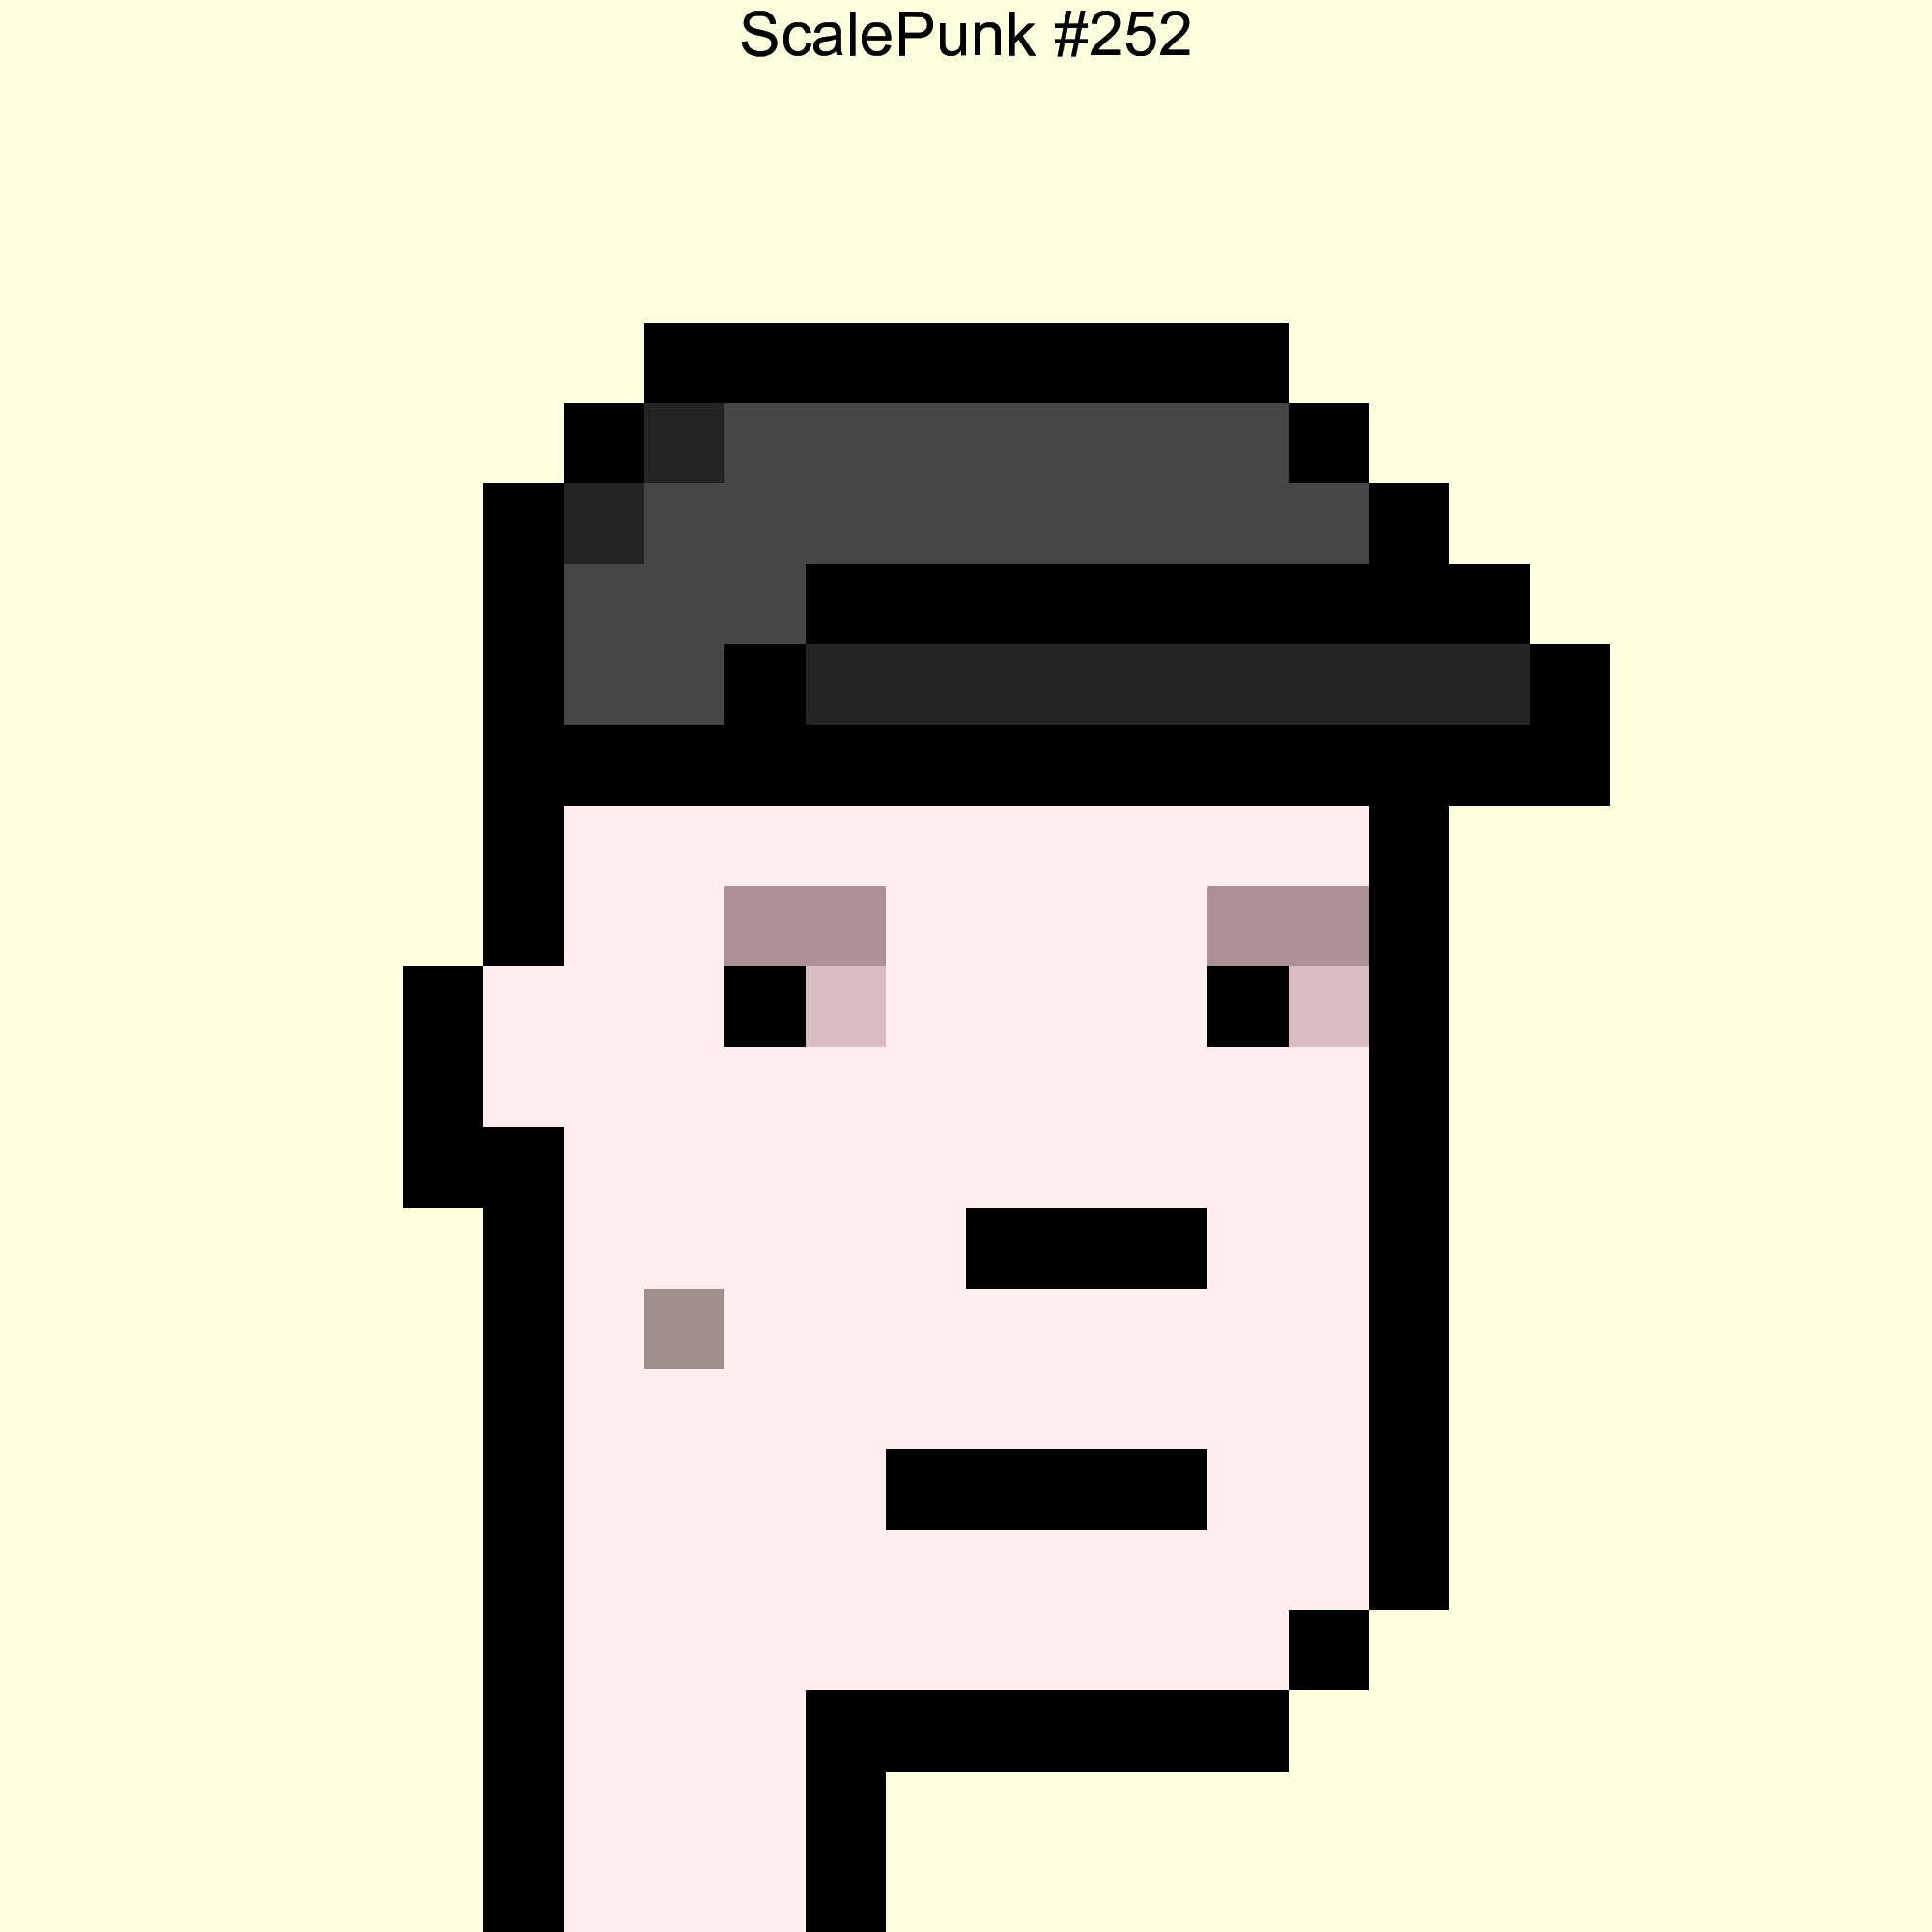 Punk 252